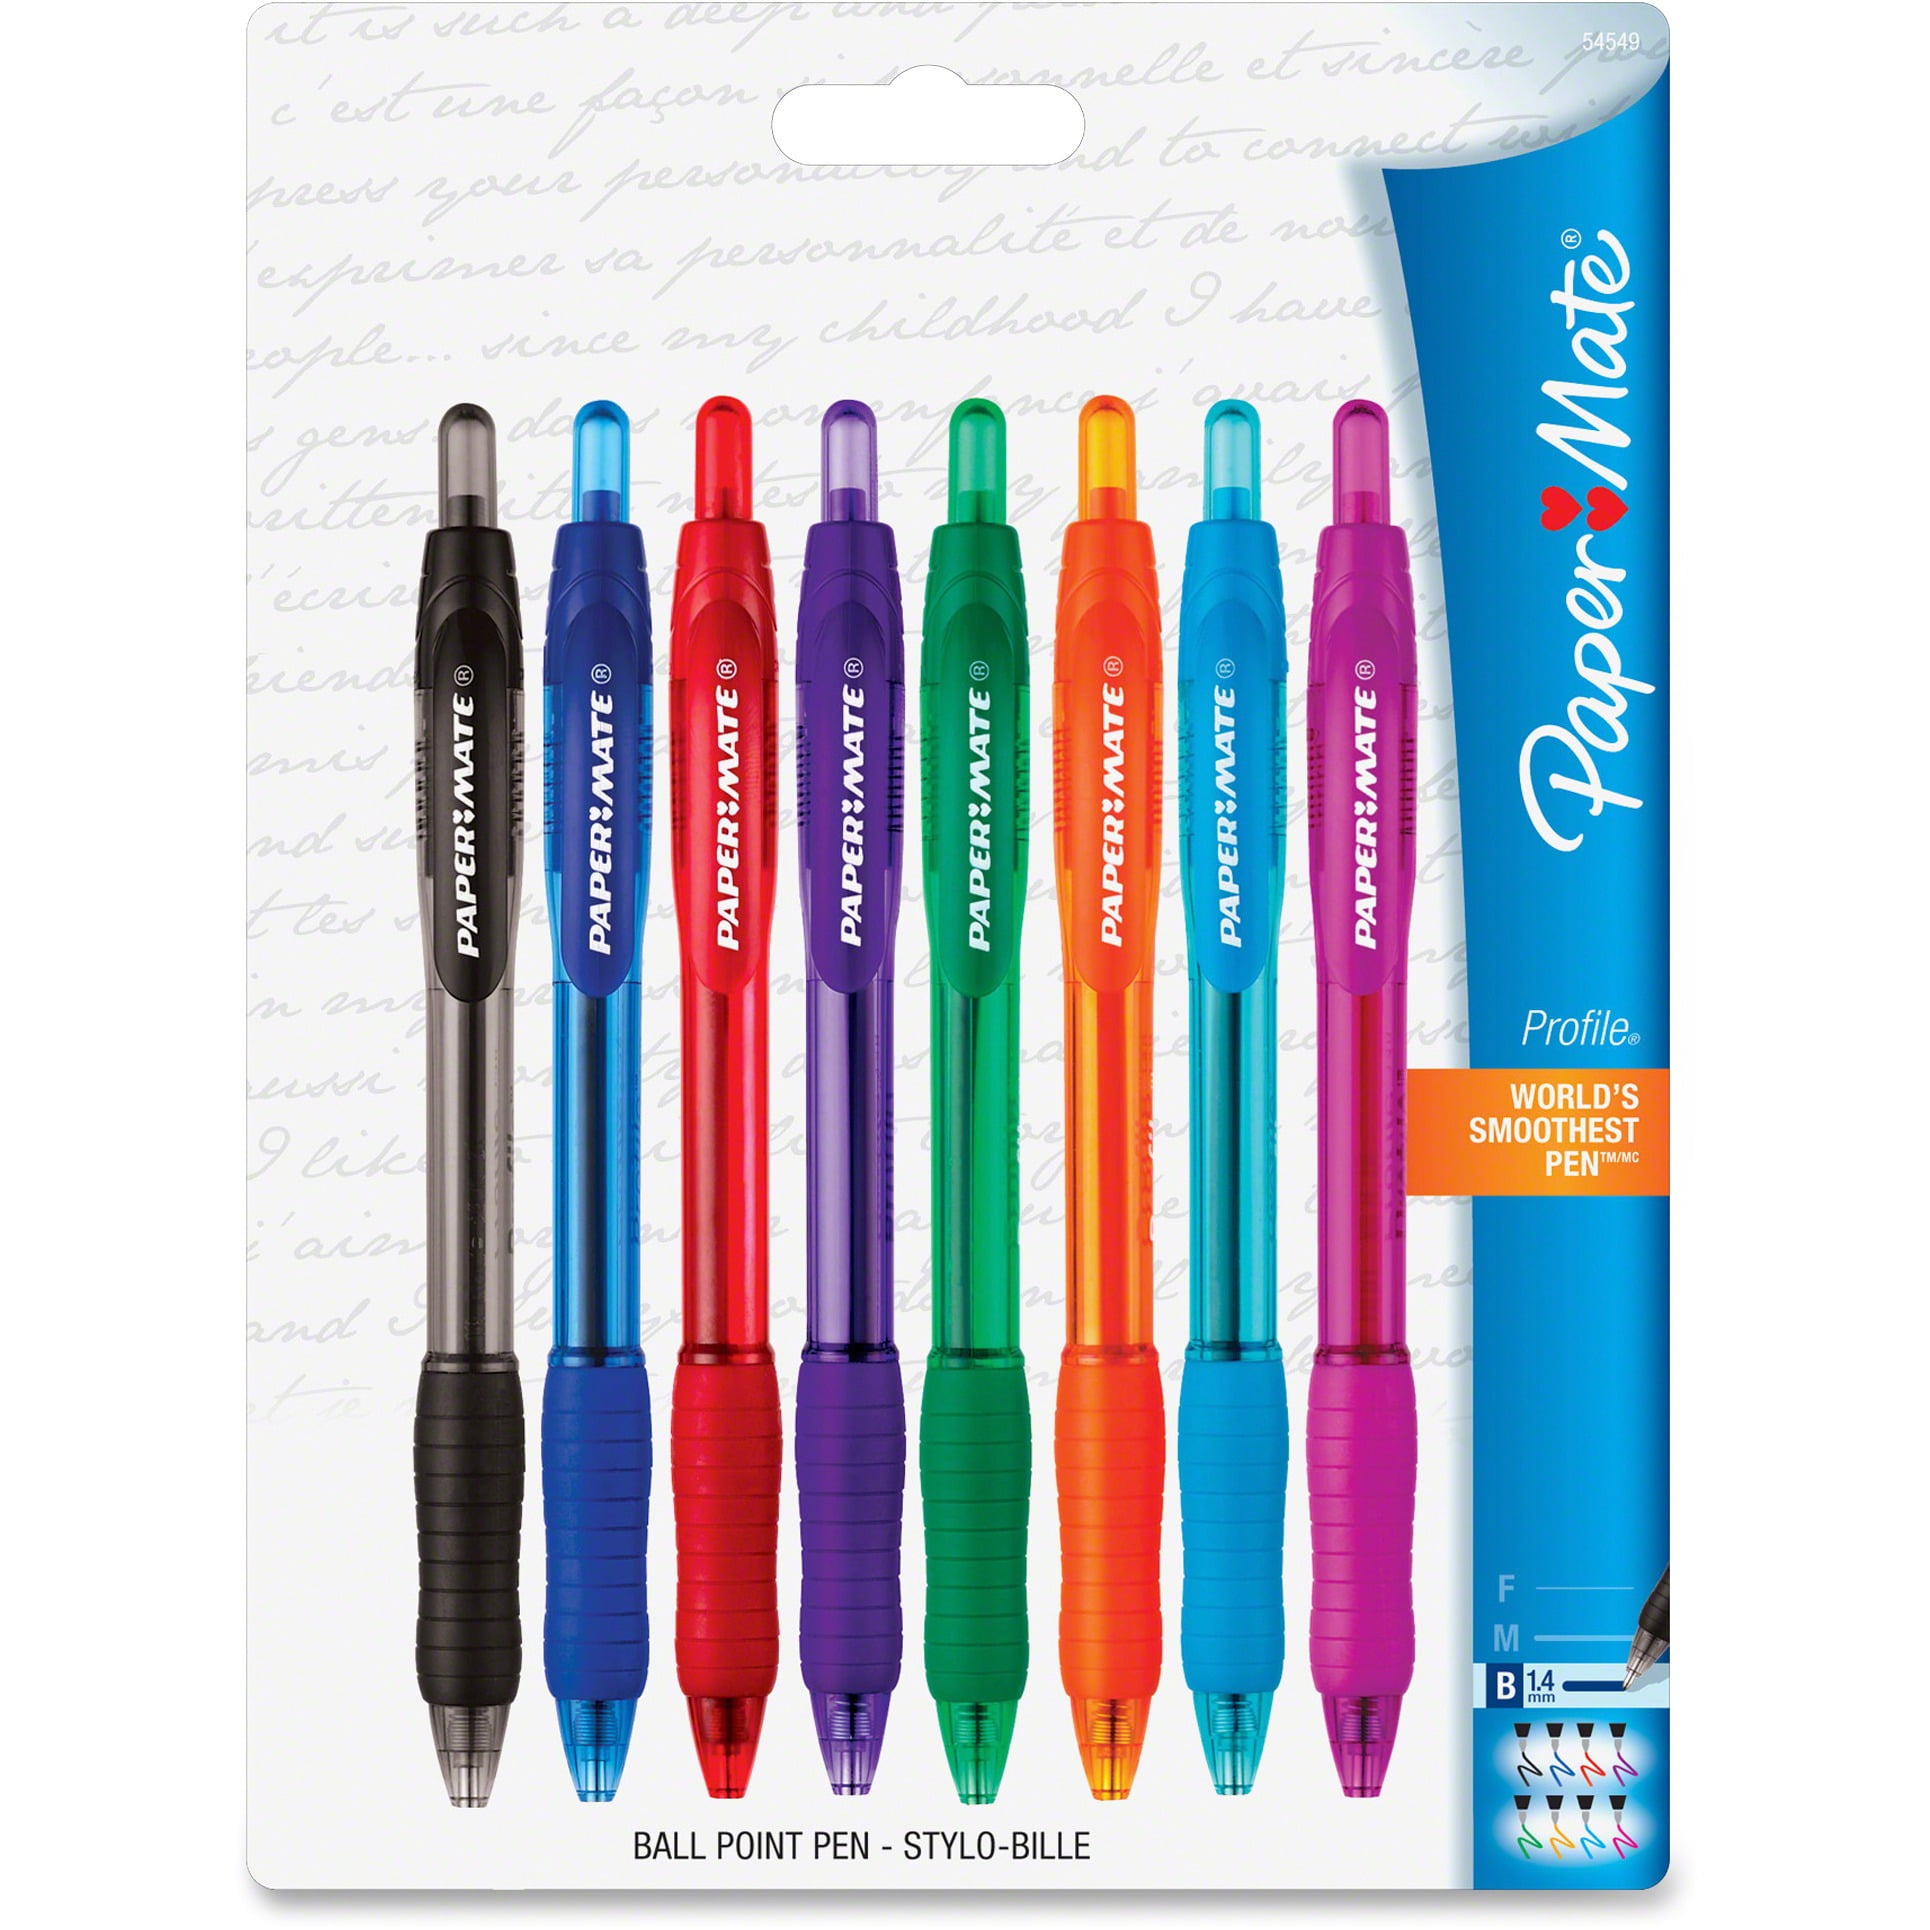 48 Count Gel Pen Set NICE PENS TO DRAW, SKETCH, CREATE ART DESIGN, Vivid  Color